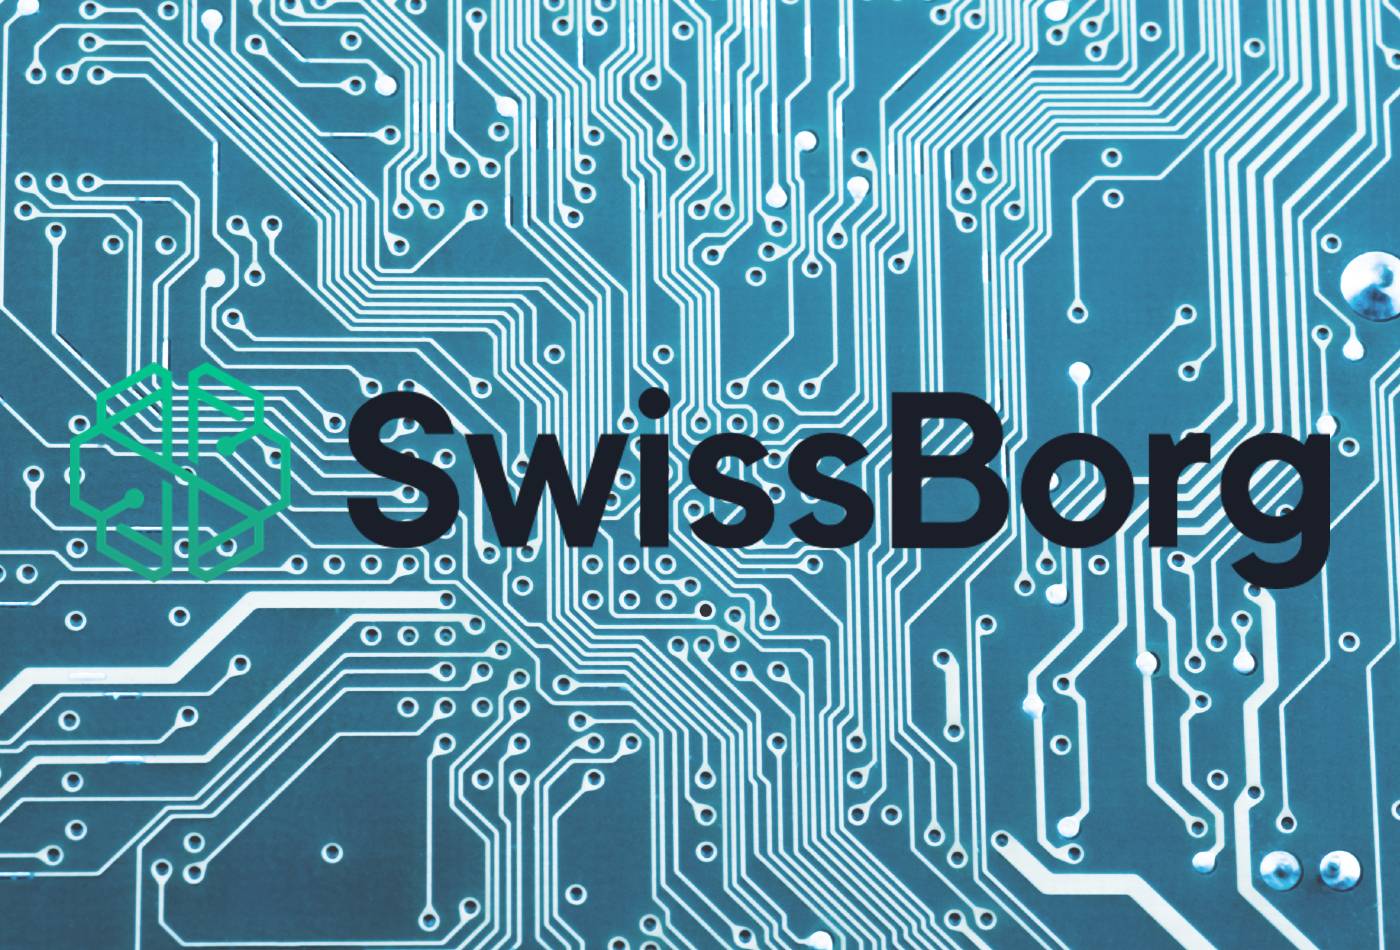 SwissBorg (CHSB) Price Prediction 2022-2030: The Most Realistic Analysis